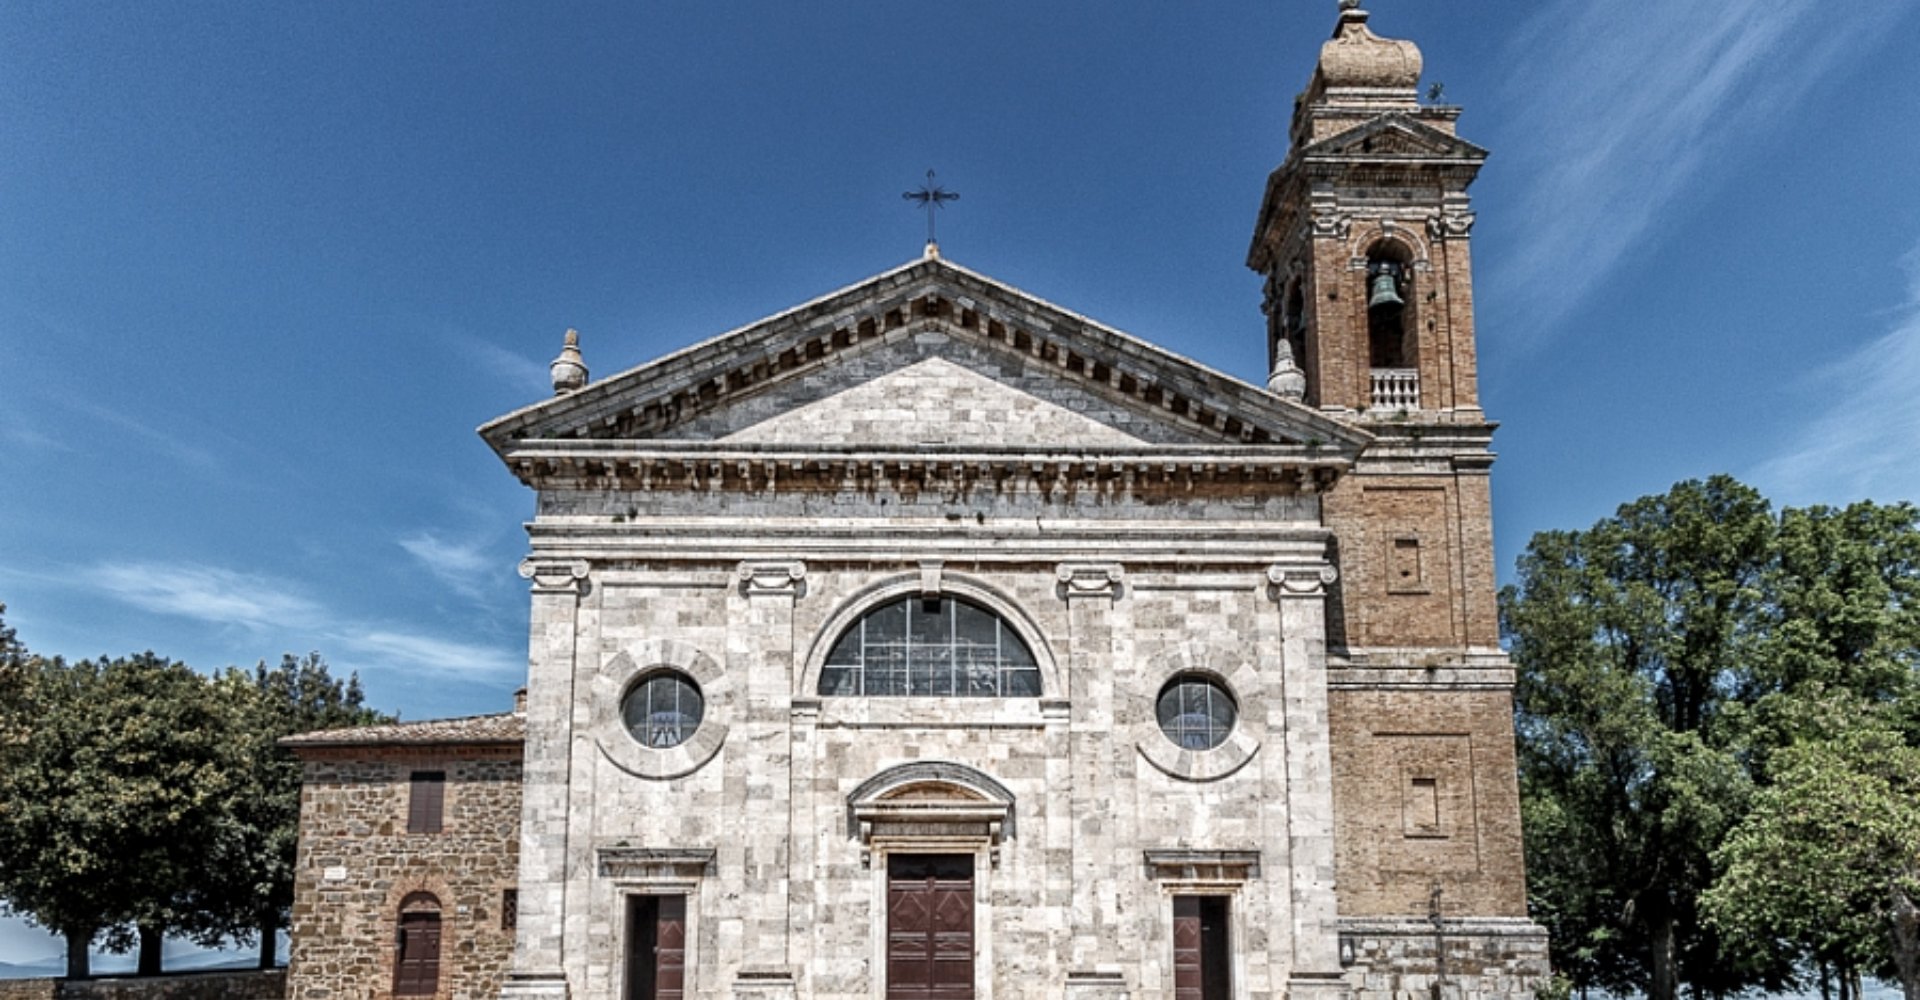 Church of Madonna del Soccorso in Montalcino